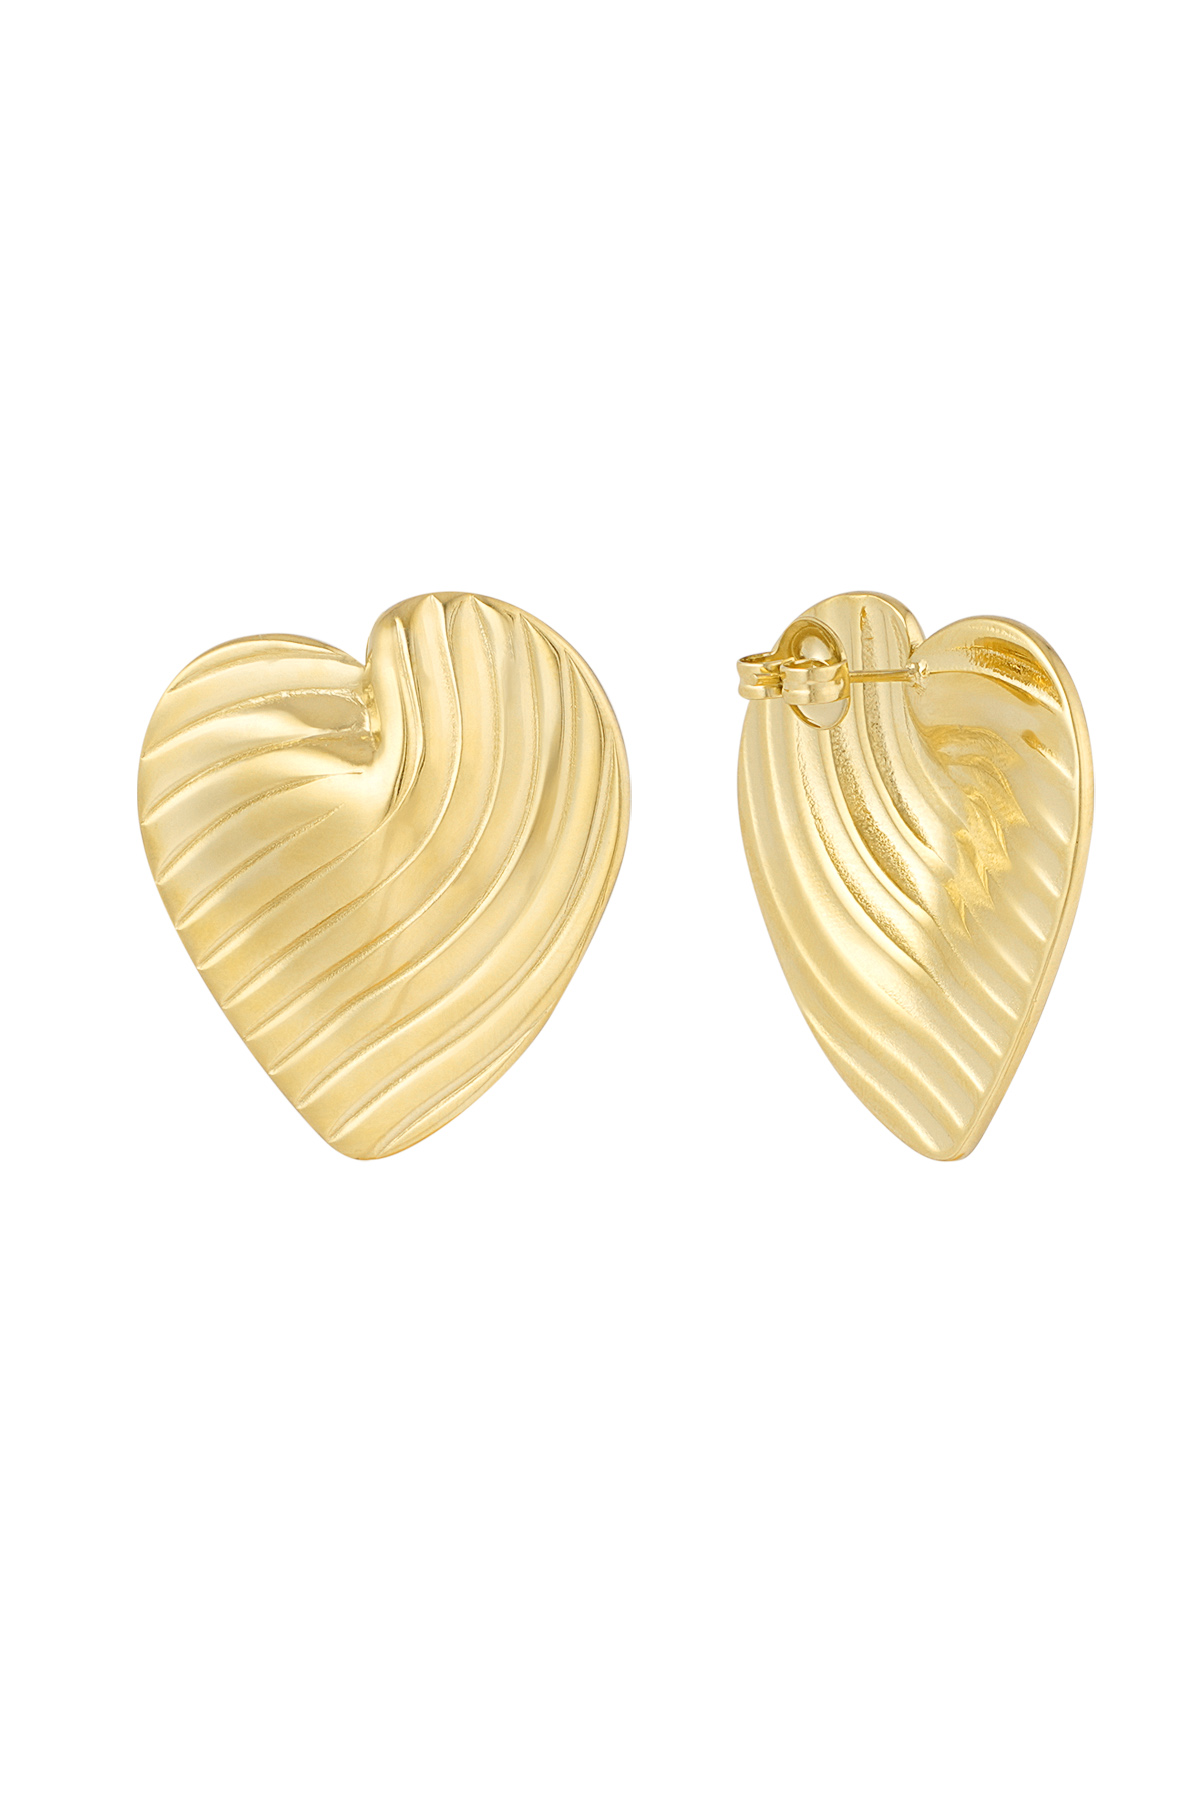 Statement earrings forever love - gold